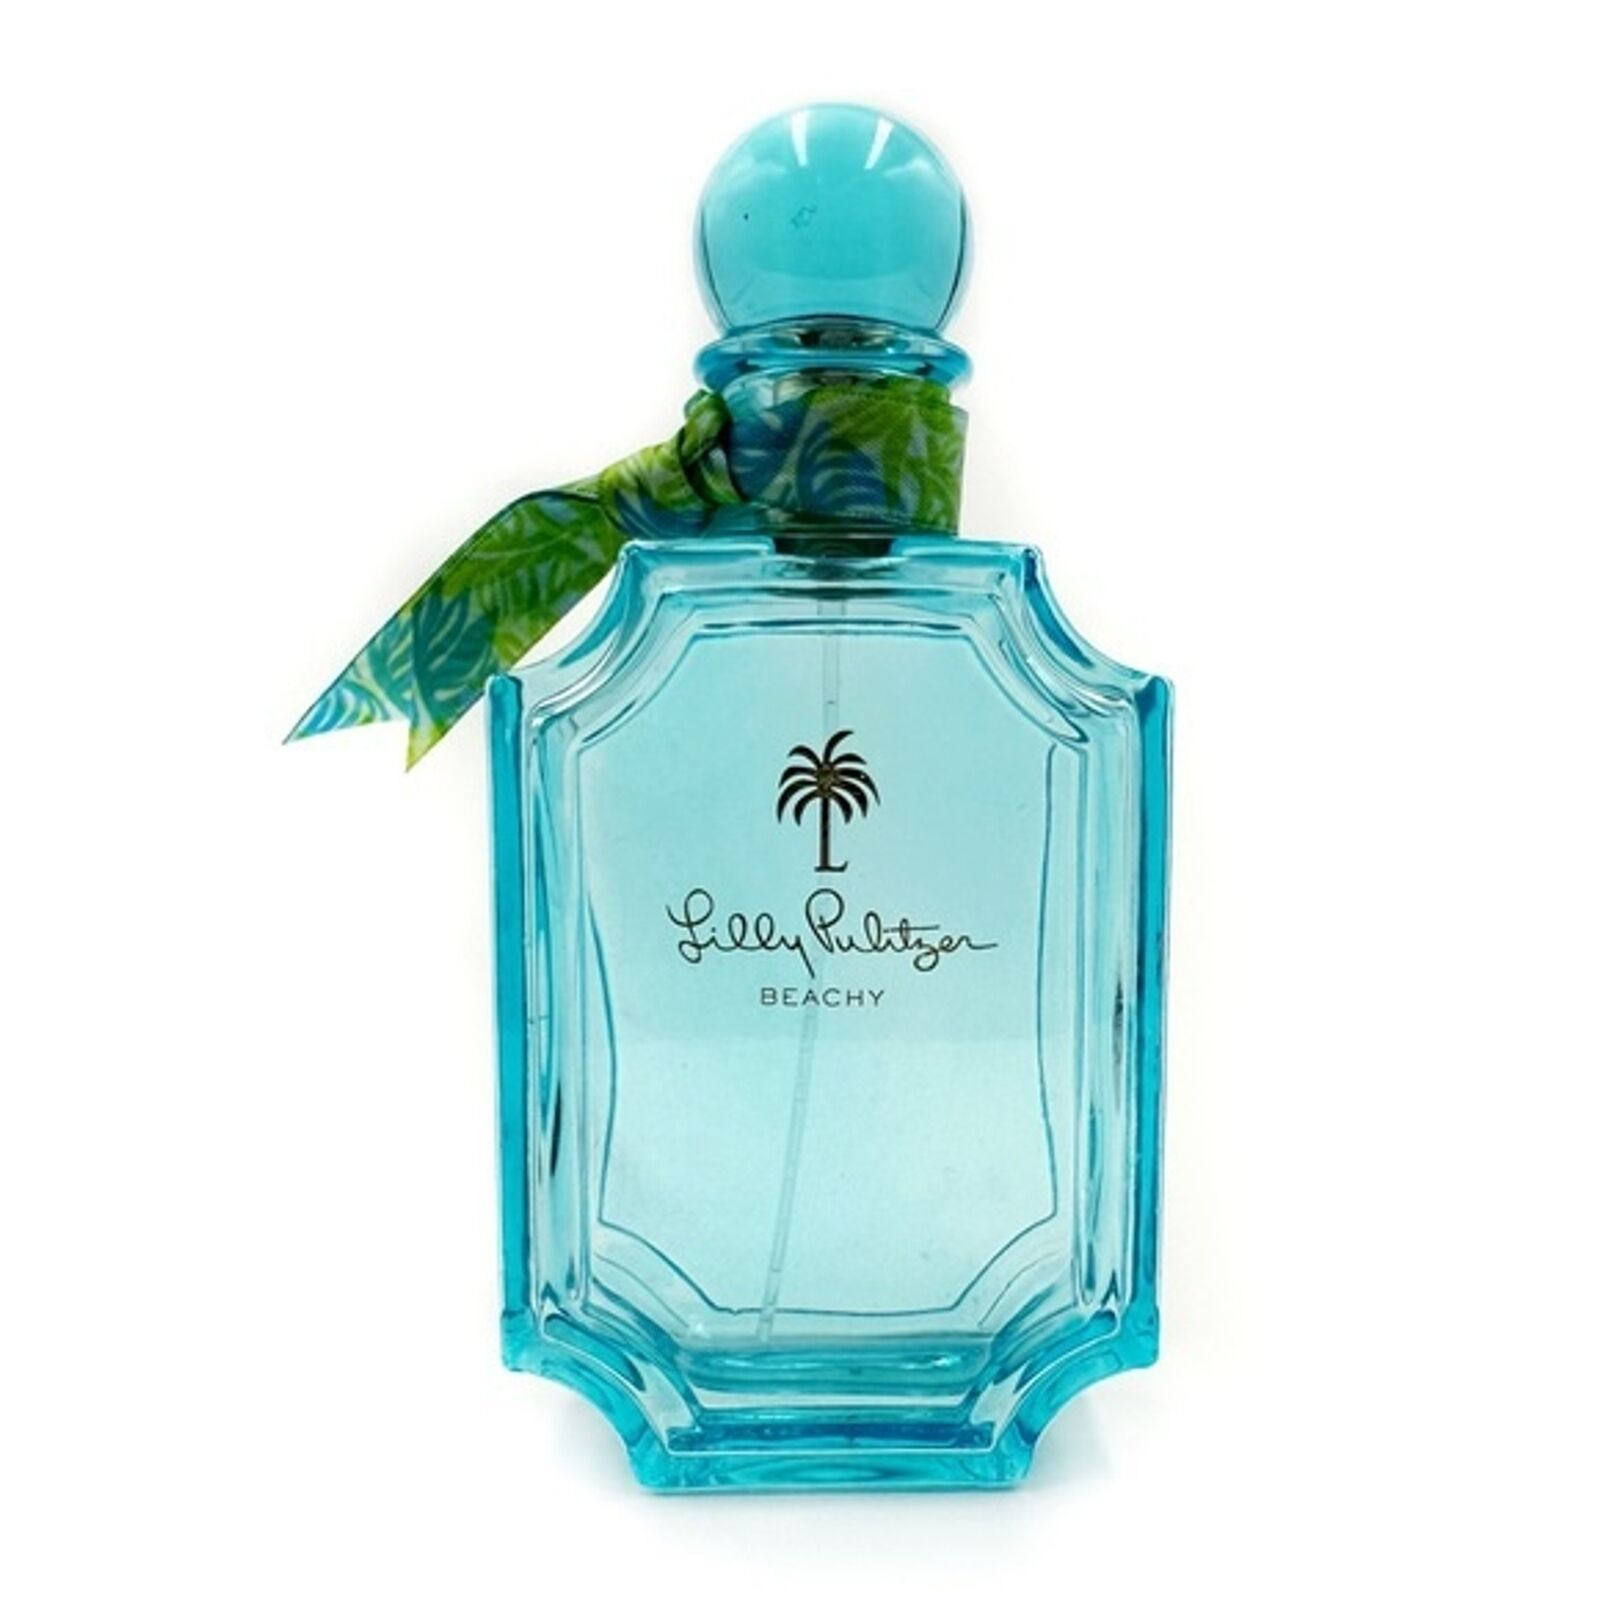 EMPTY Lilly Pulitzer Beachy EMPTY Perfume Bottle Fragrance Blue Glass Decoration